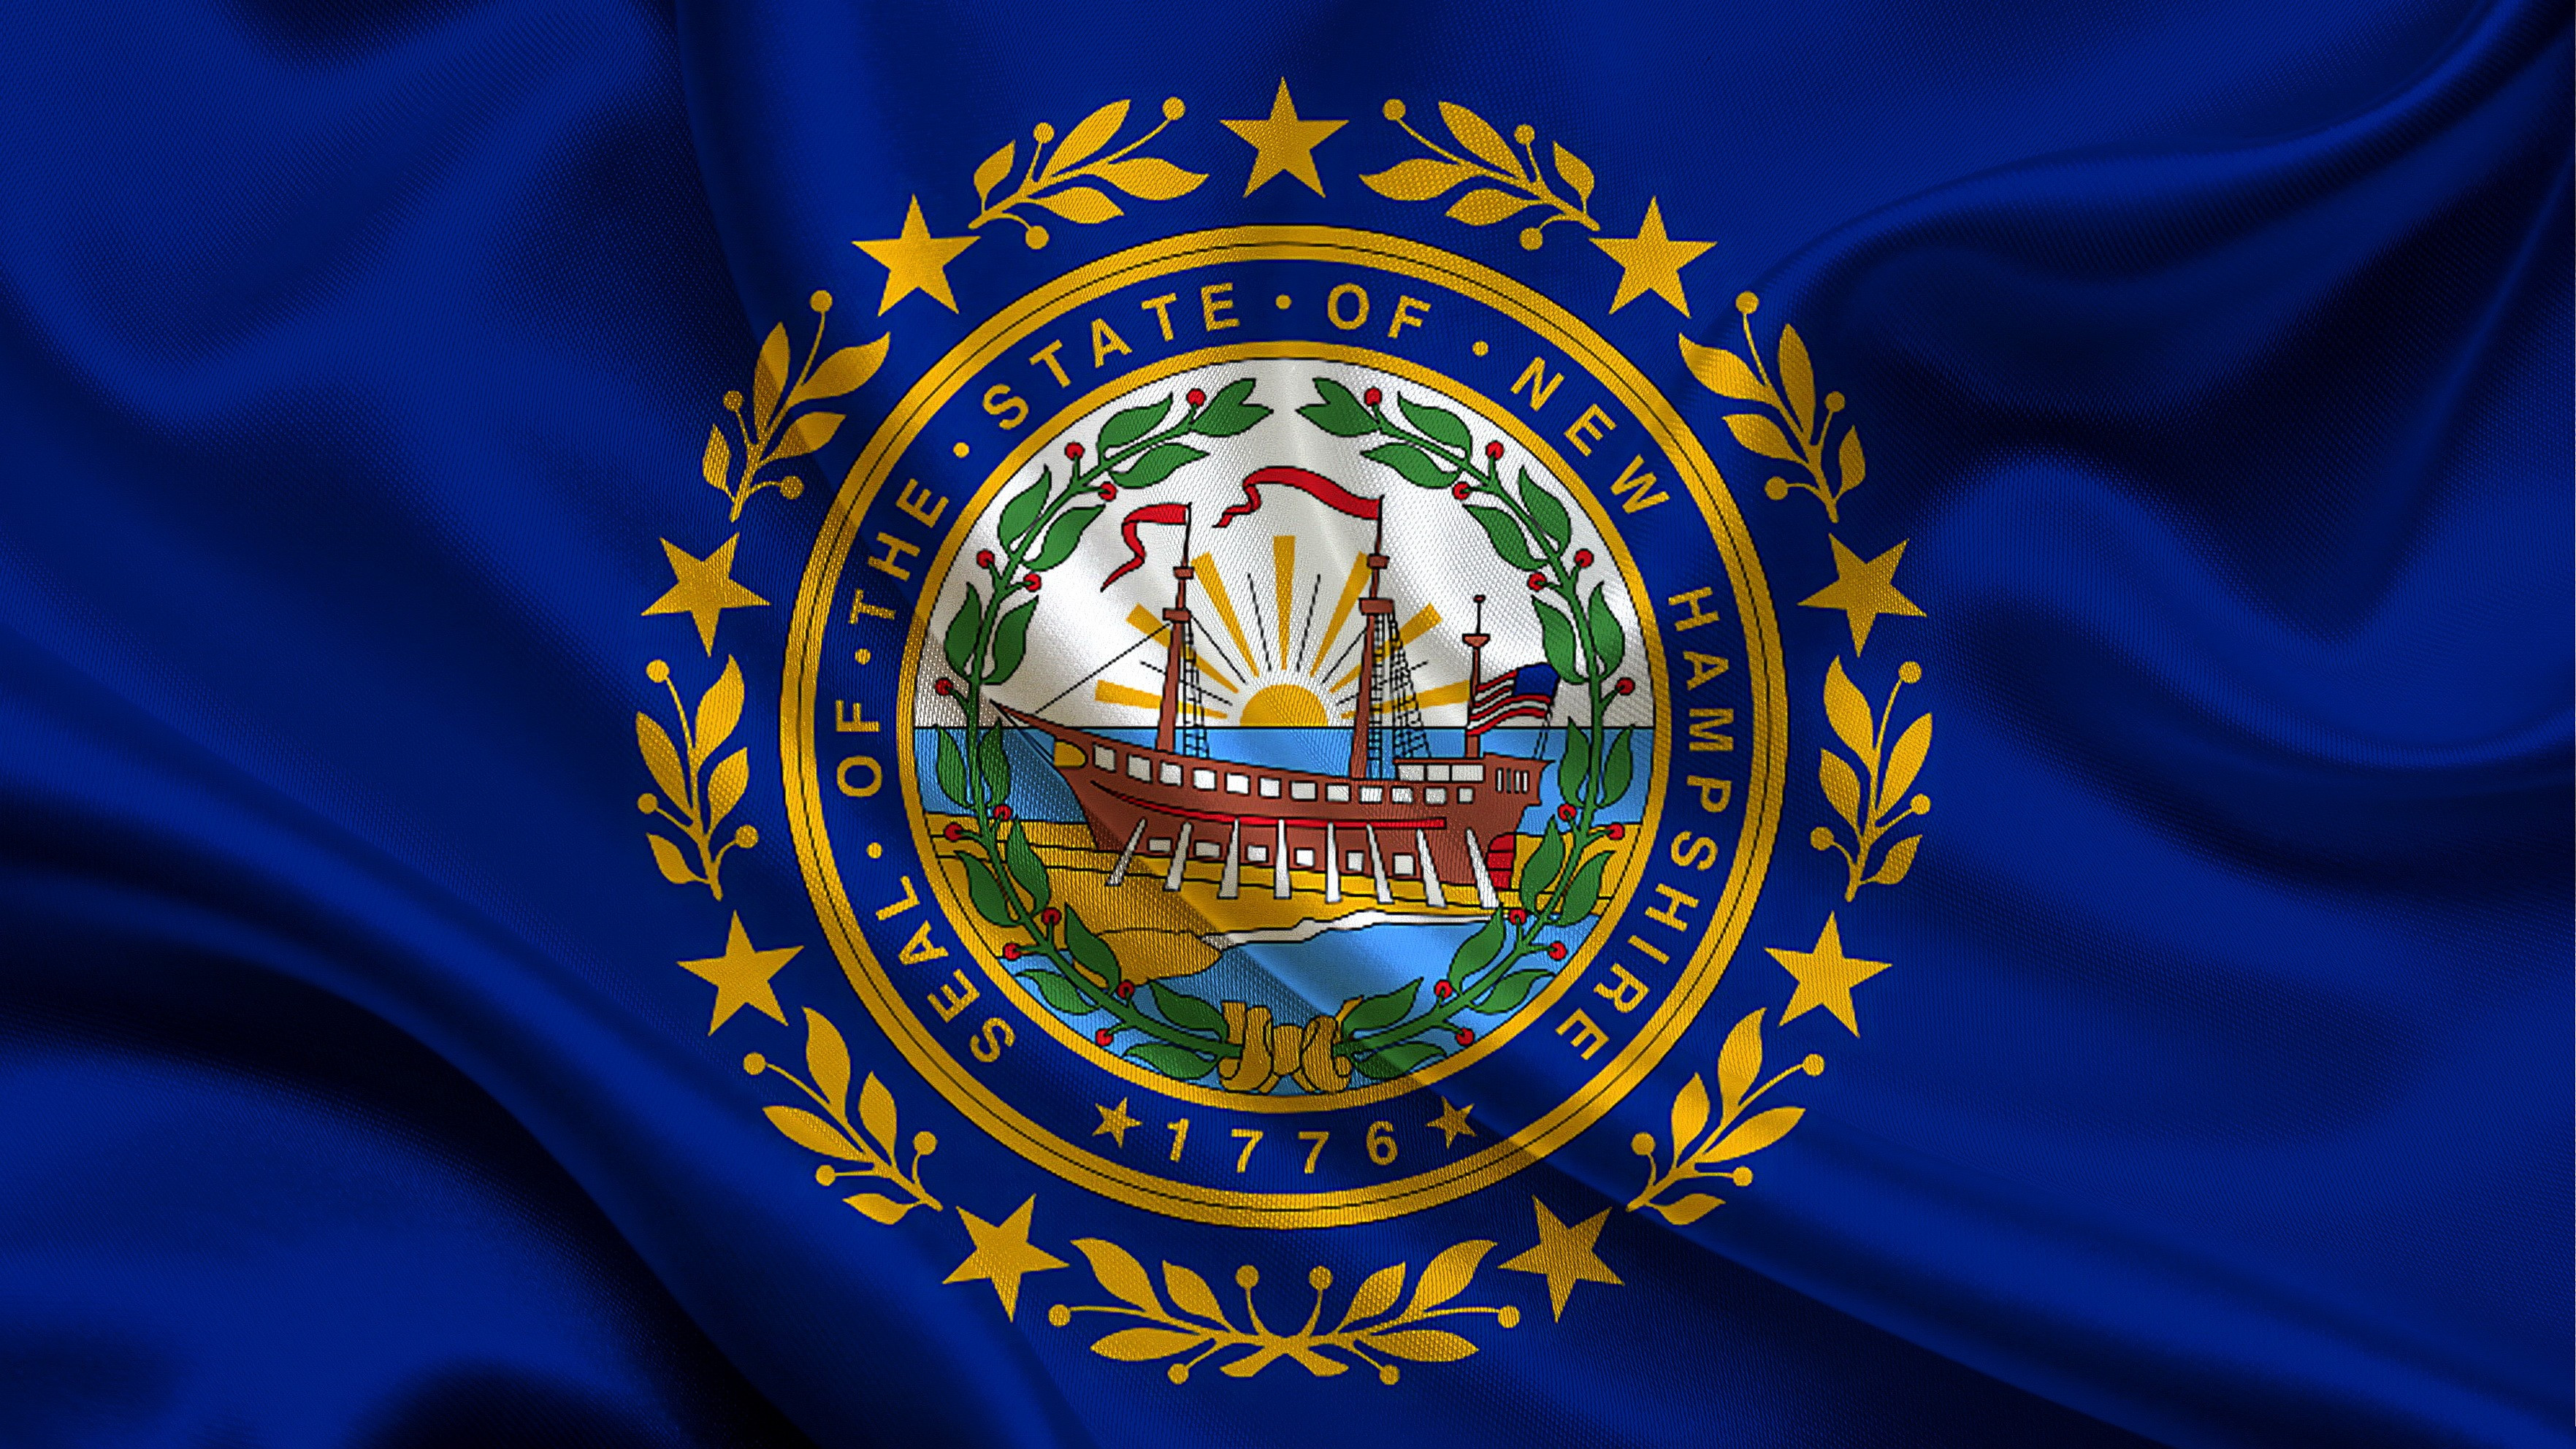 General 3527x1984 New Hampshire flag blue background blue USA digital art